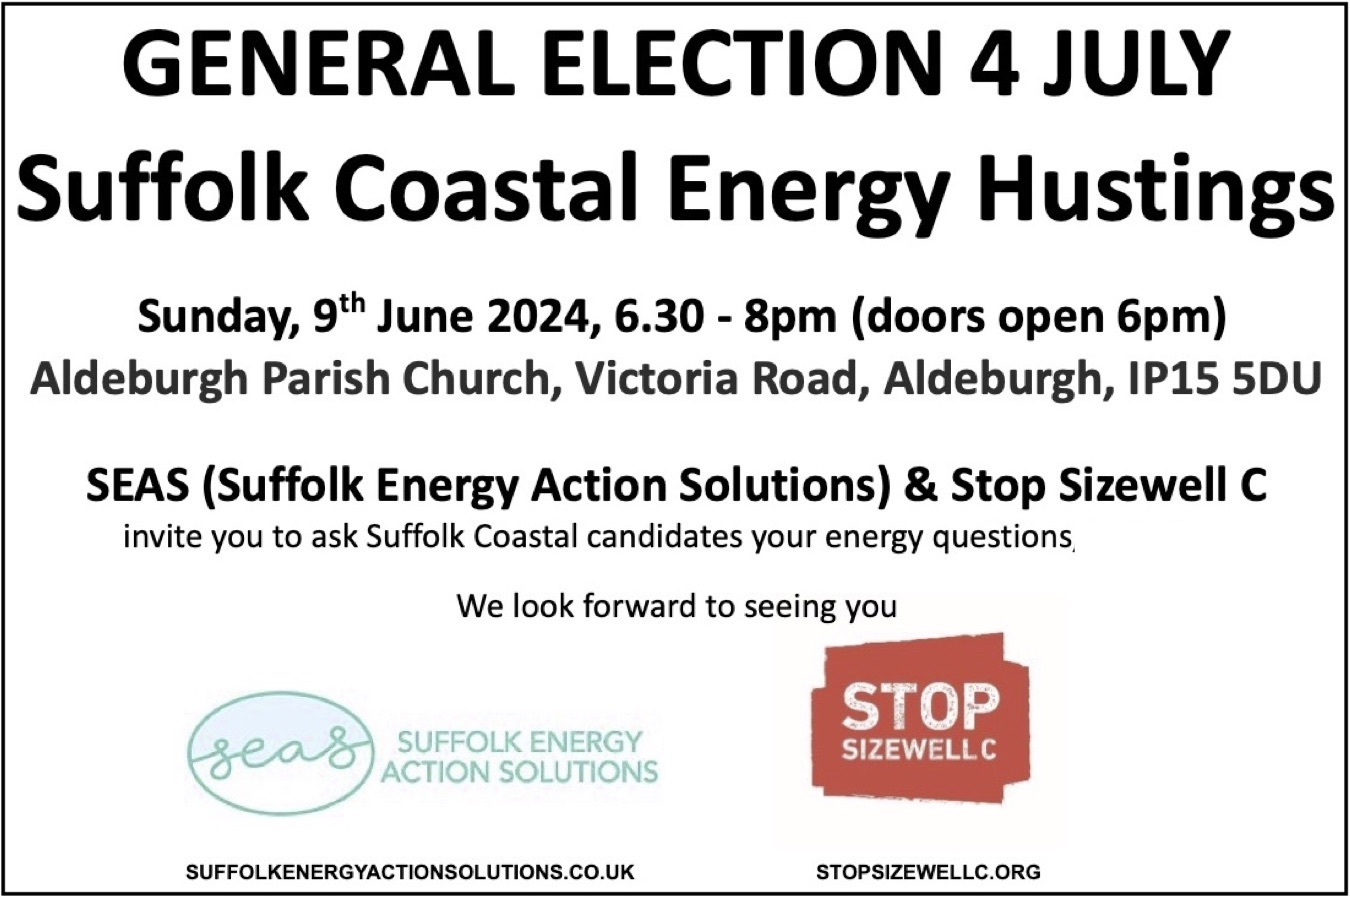 Sun 9th June: Sfk Coastal Energy Hustings